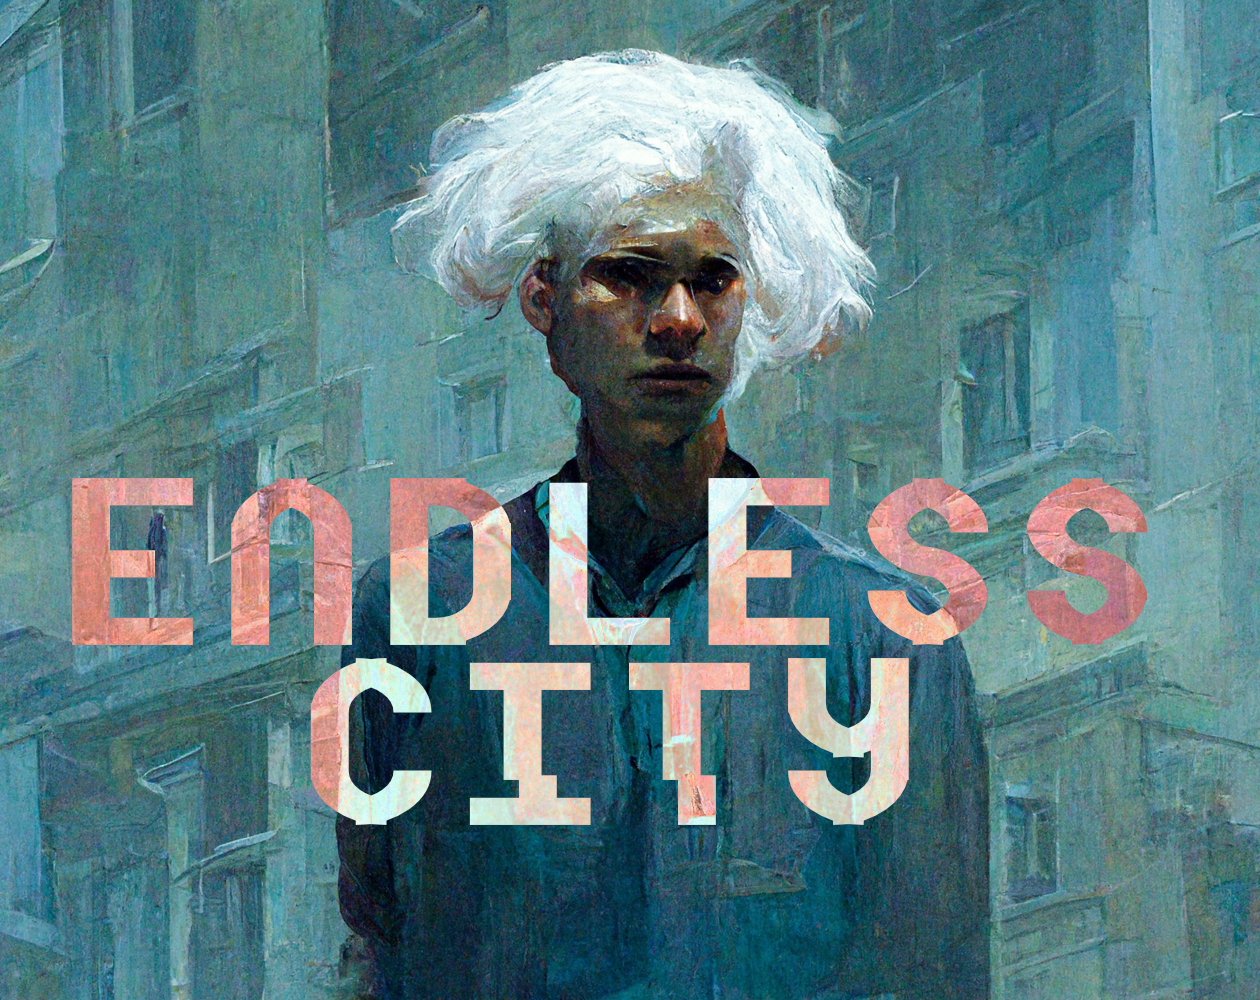 Endless City